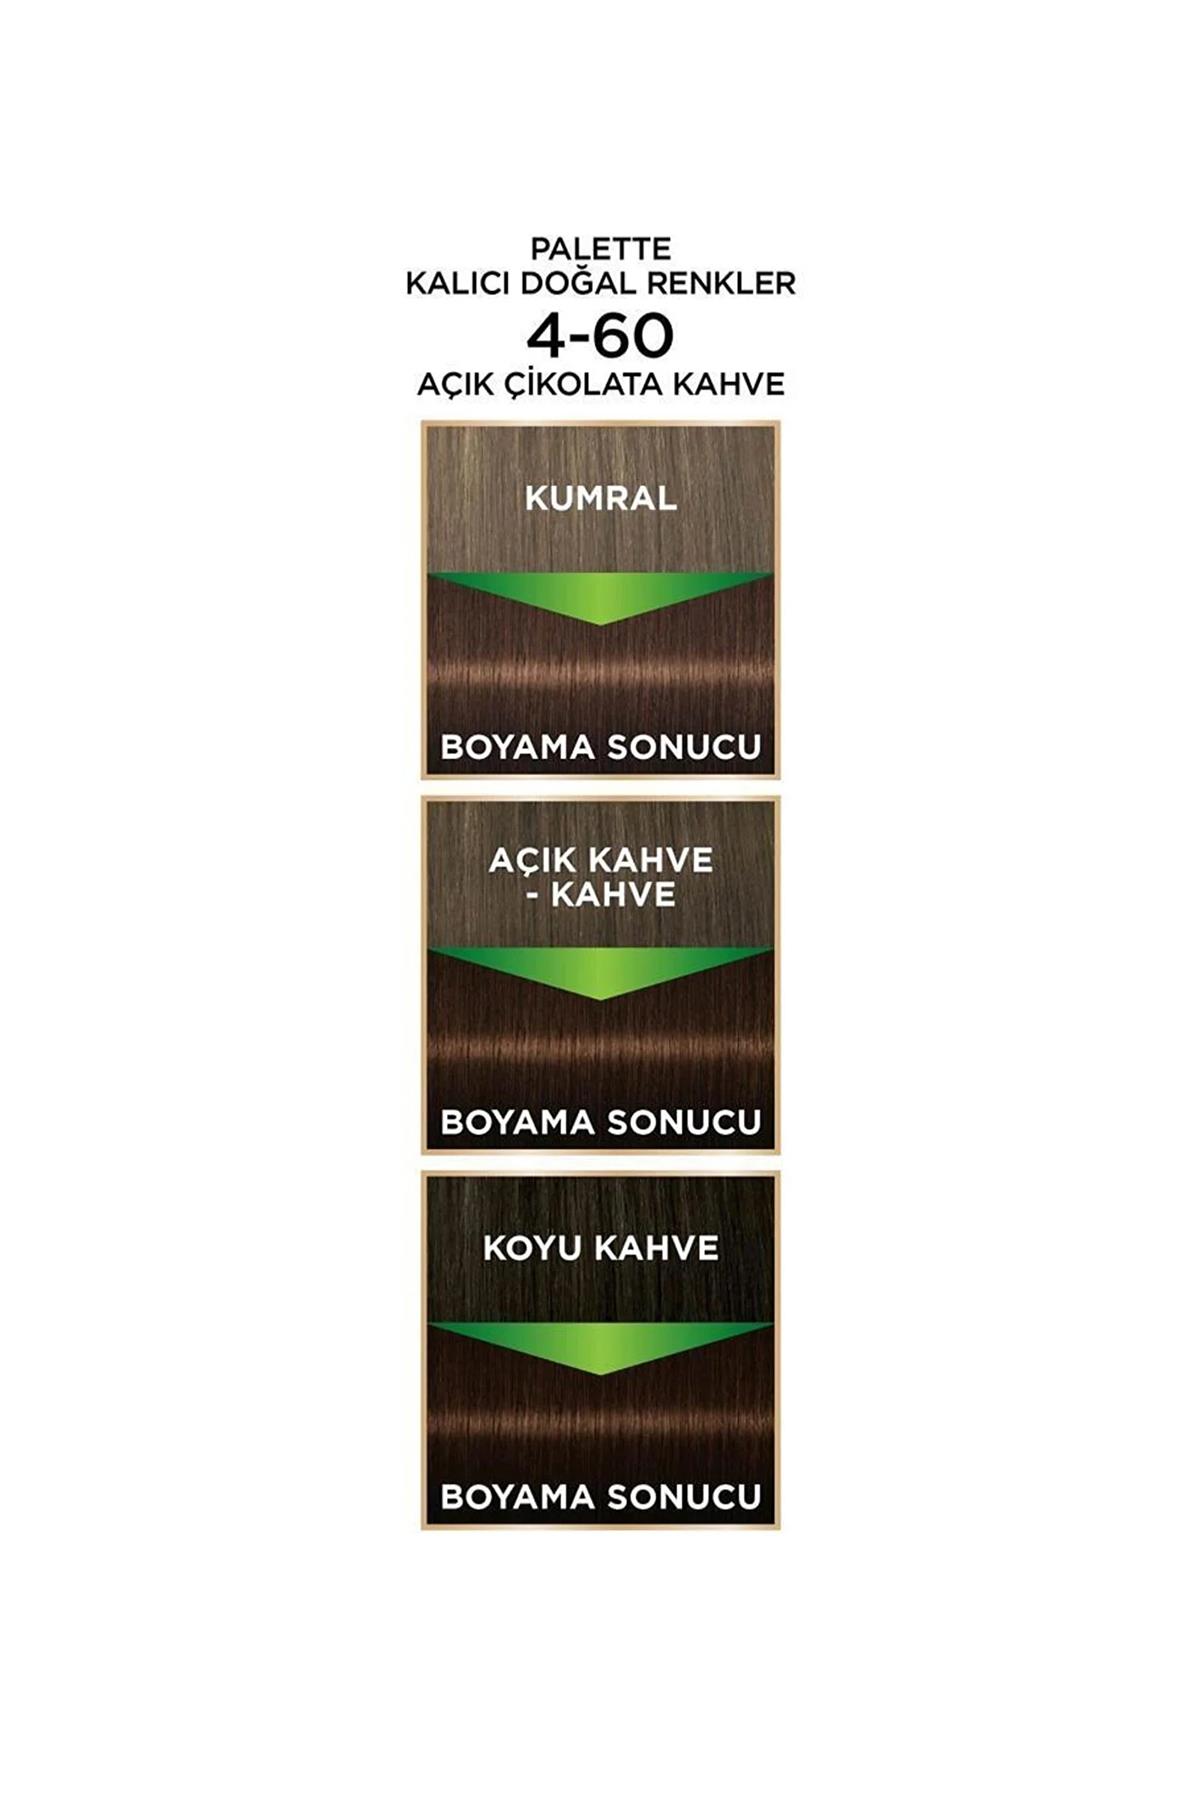 palette-kalici-dogal-renkler-sac-boyasi-no-4-60-acik-cikolata-kahve-8981-1.jpg